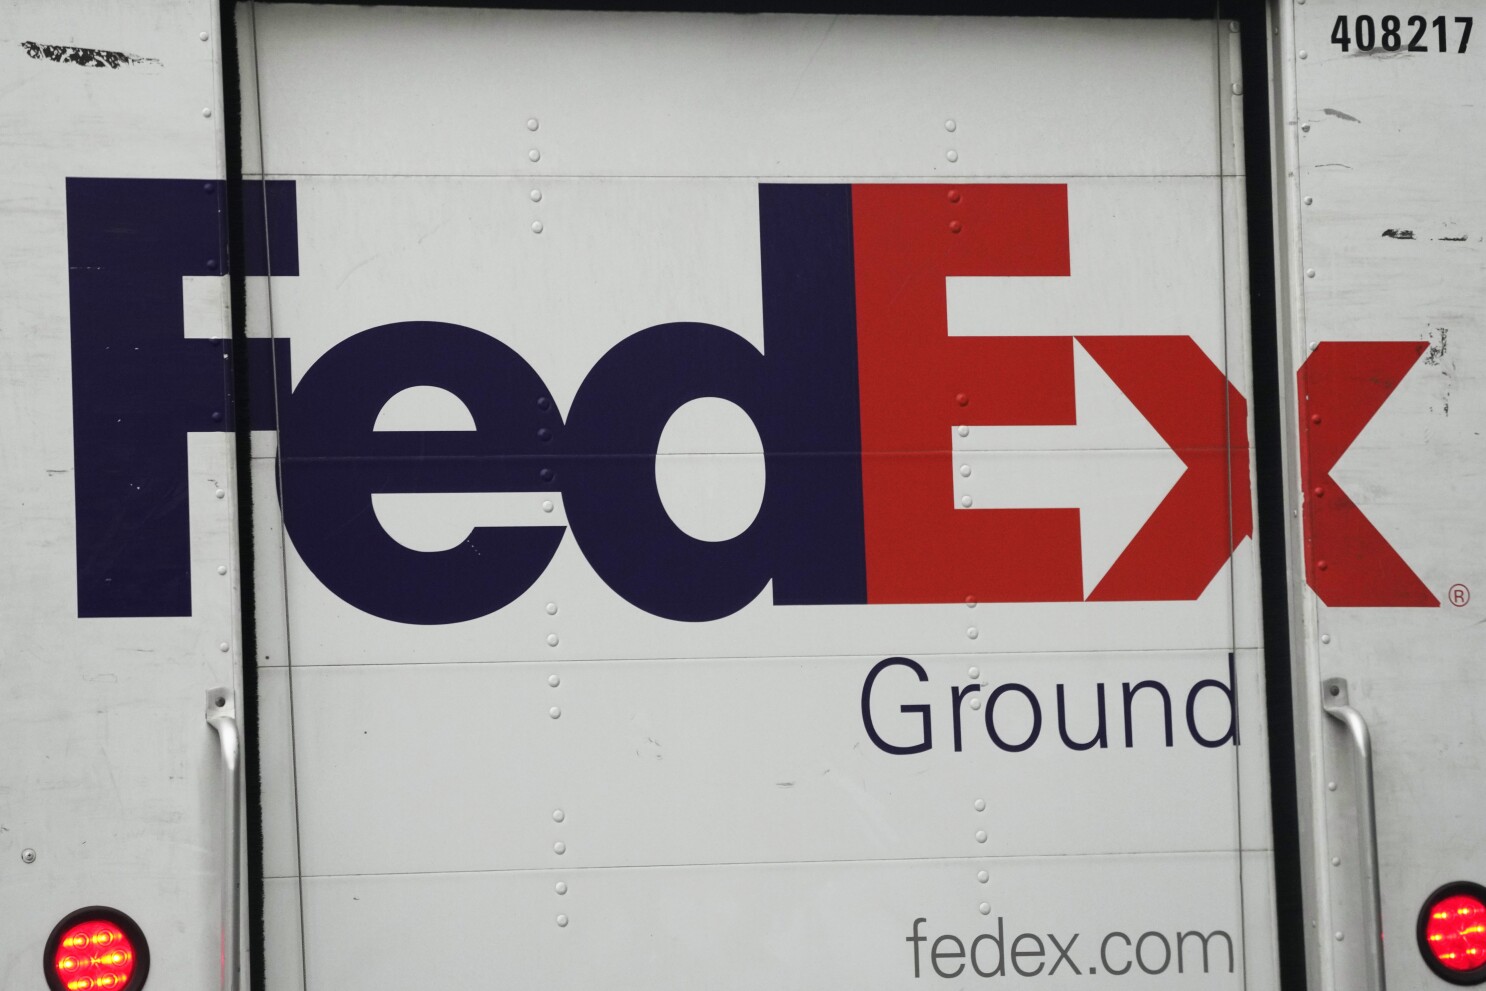 Fatal Incident Unfolds at Memphis FedEx World Hub, Prompting Investigation